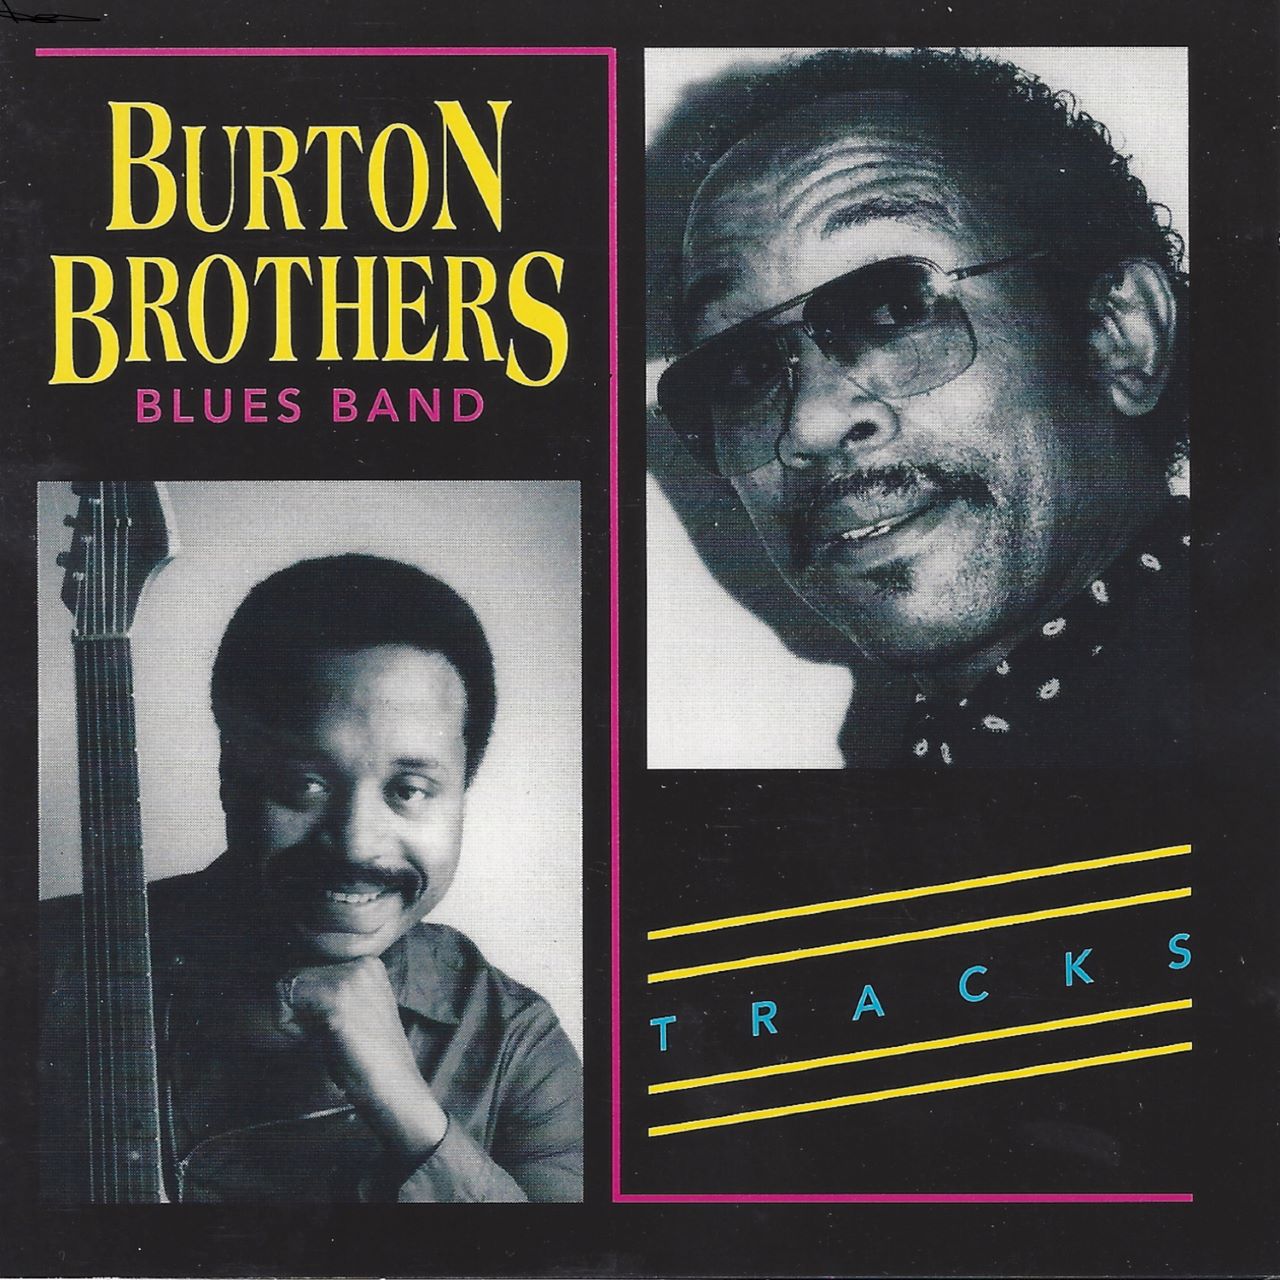 Burton Brothers Blues Band – Tracks cover album